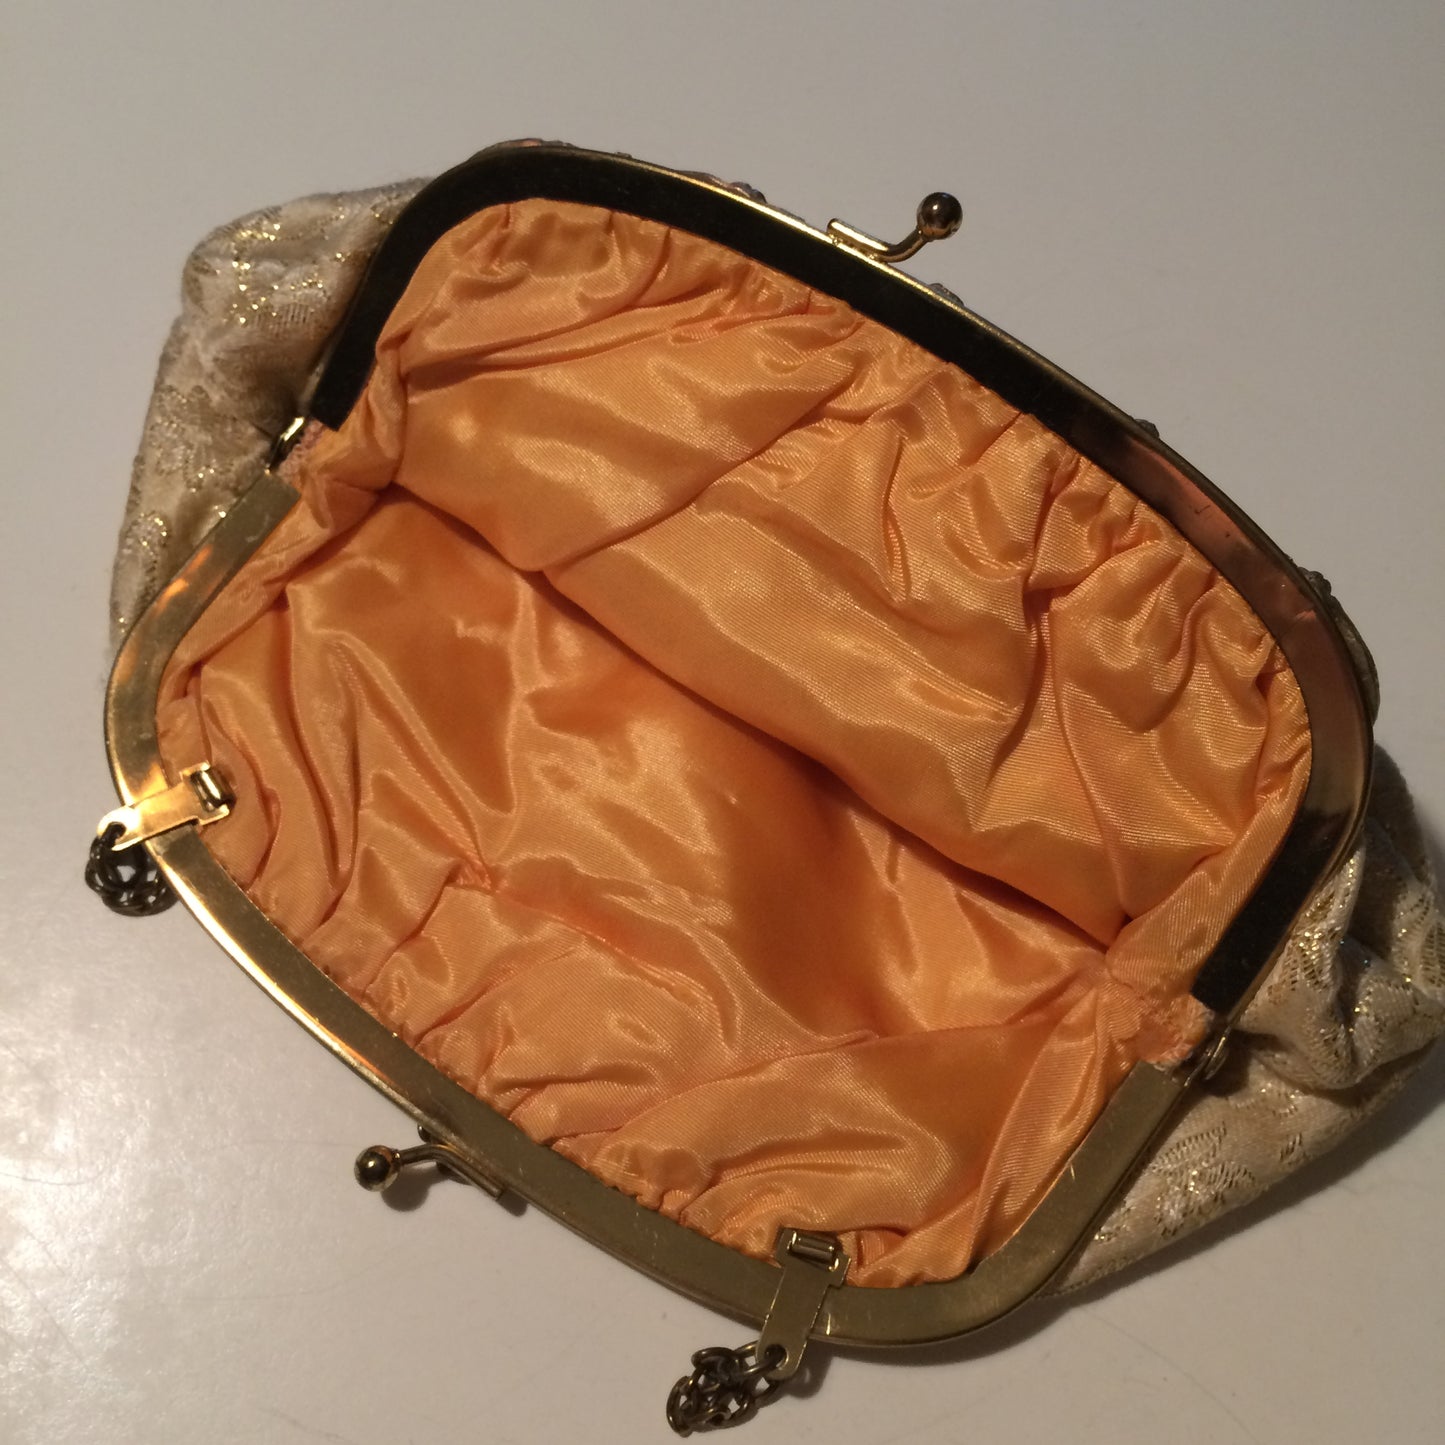 Lovely Golden Metallic Embroidered Champagne Silk Handbag w/ Rhinestones circa 1950s